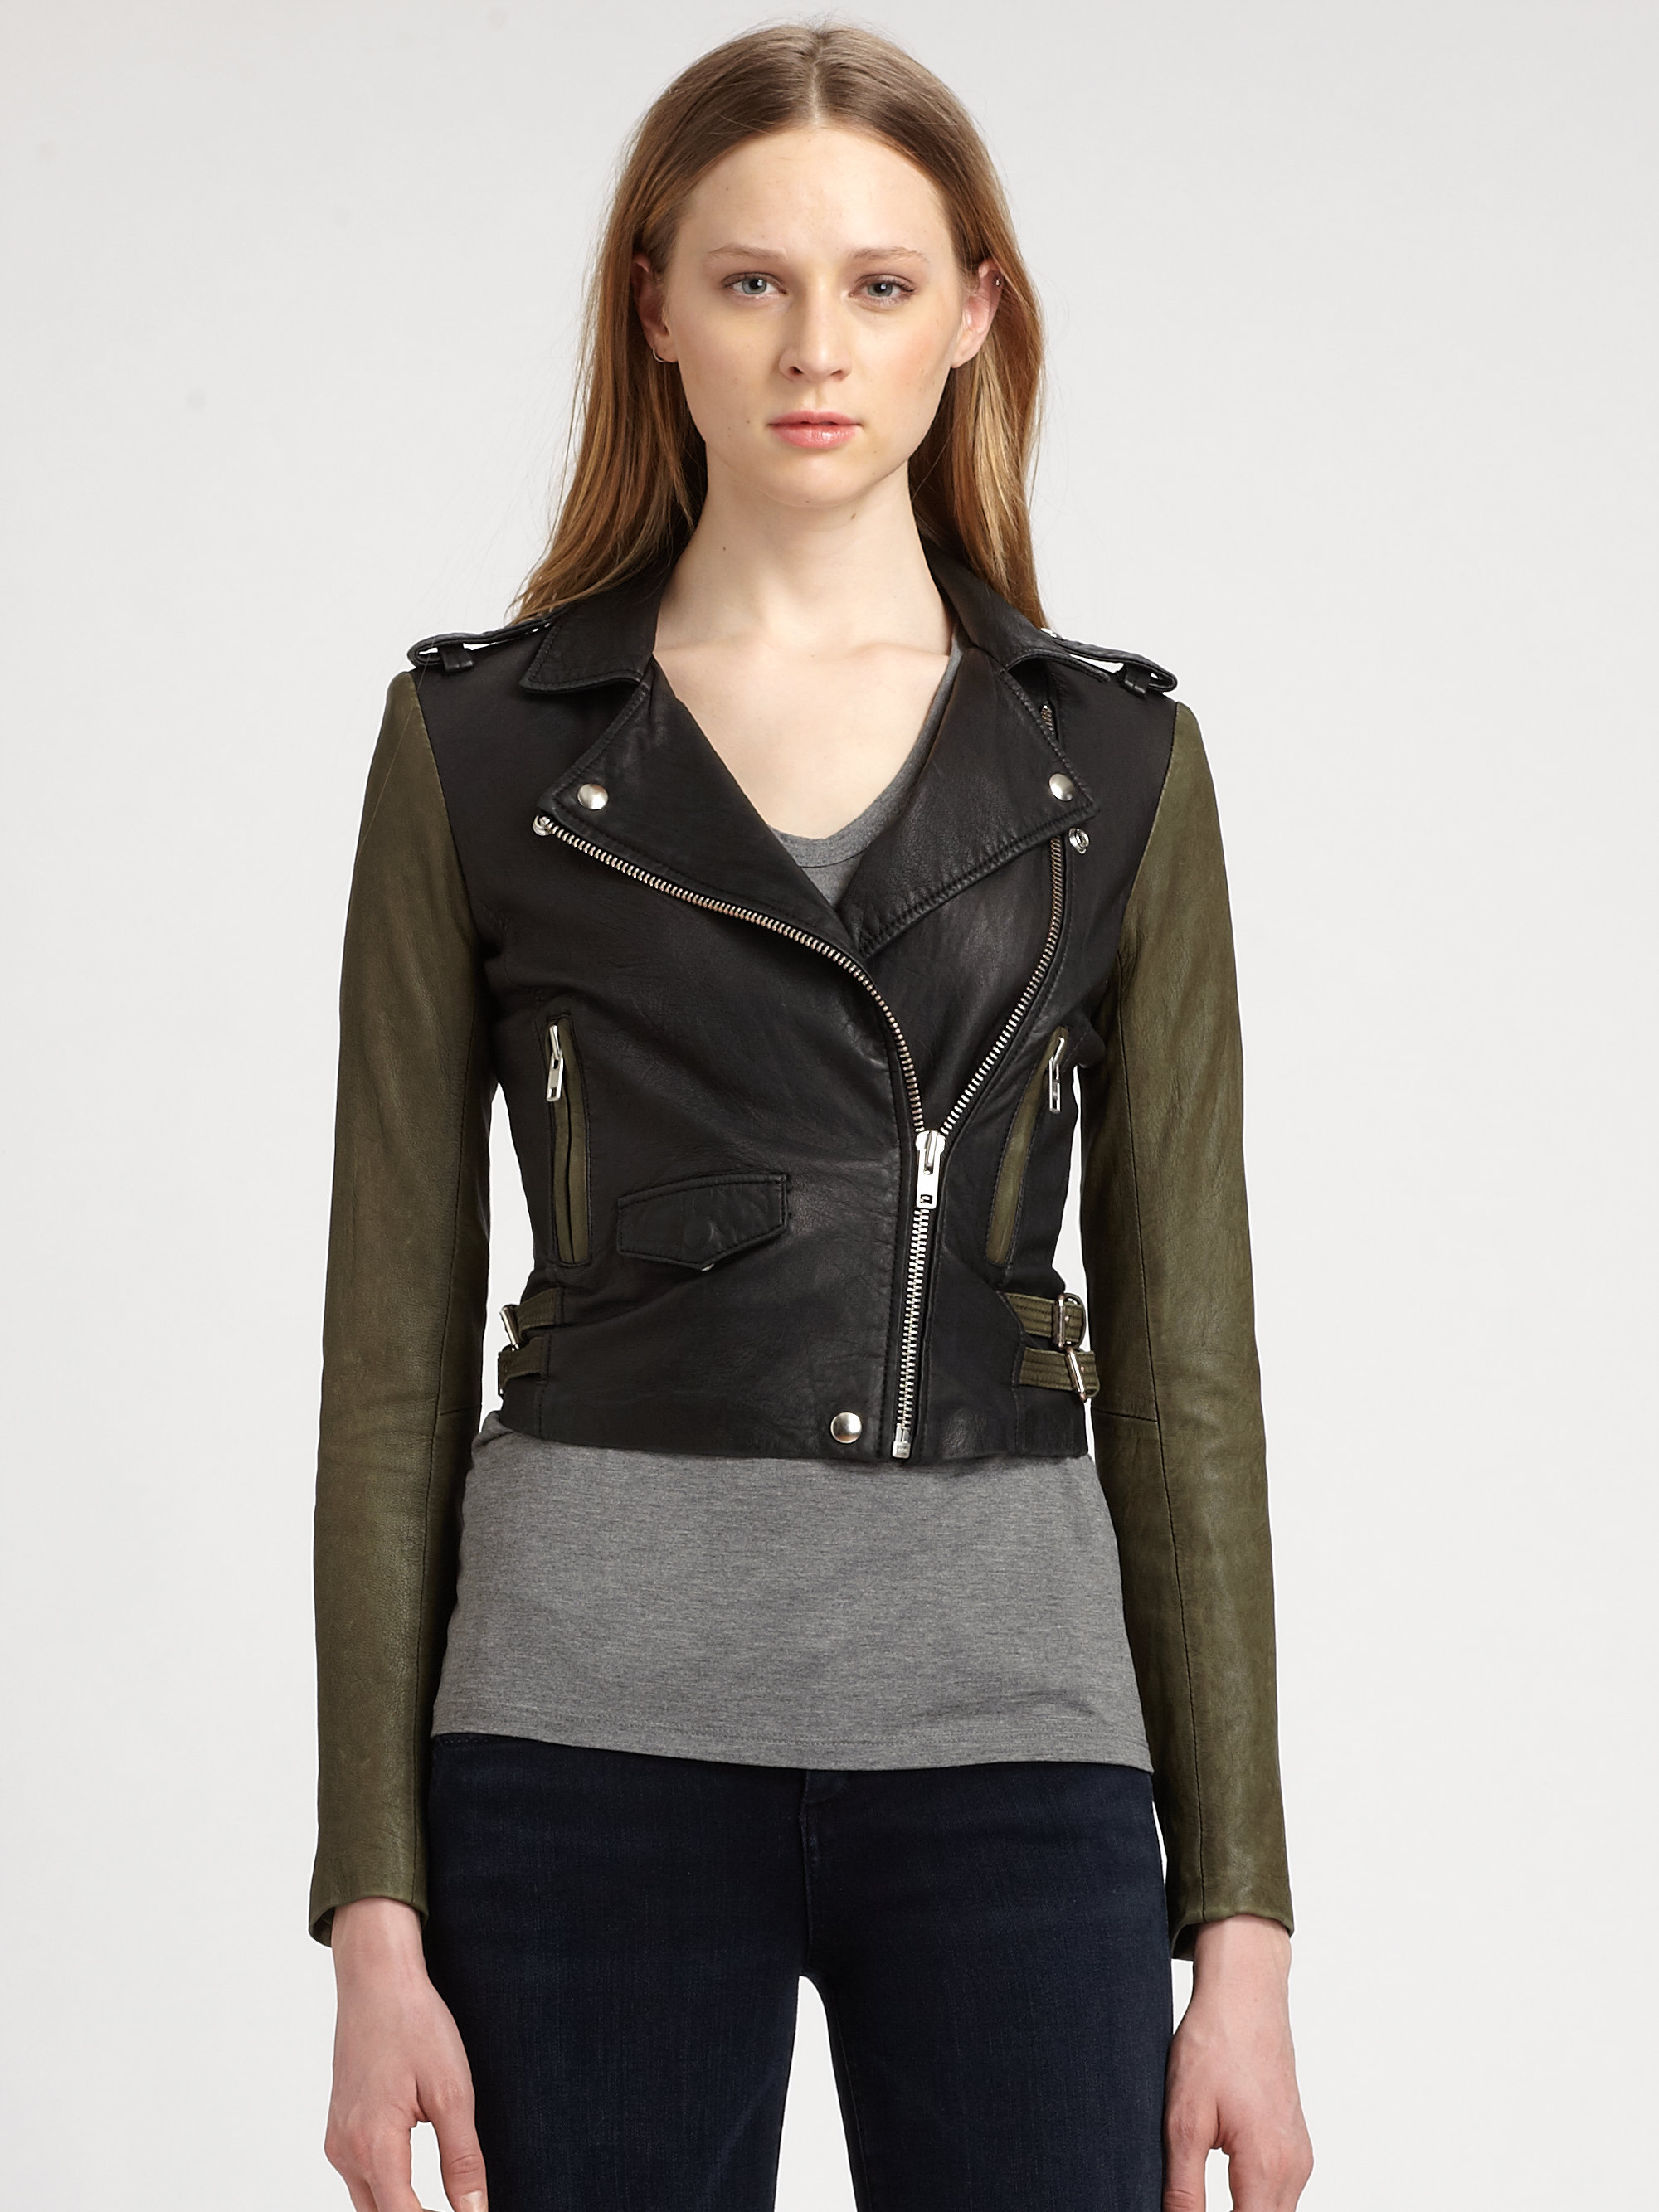 Lyst - Iro Ashville Leather Jacket in Black